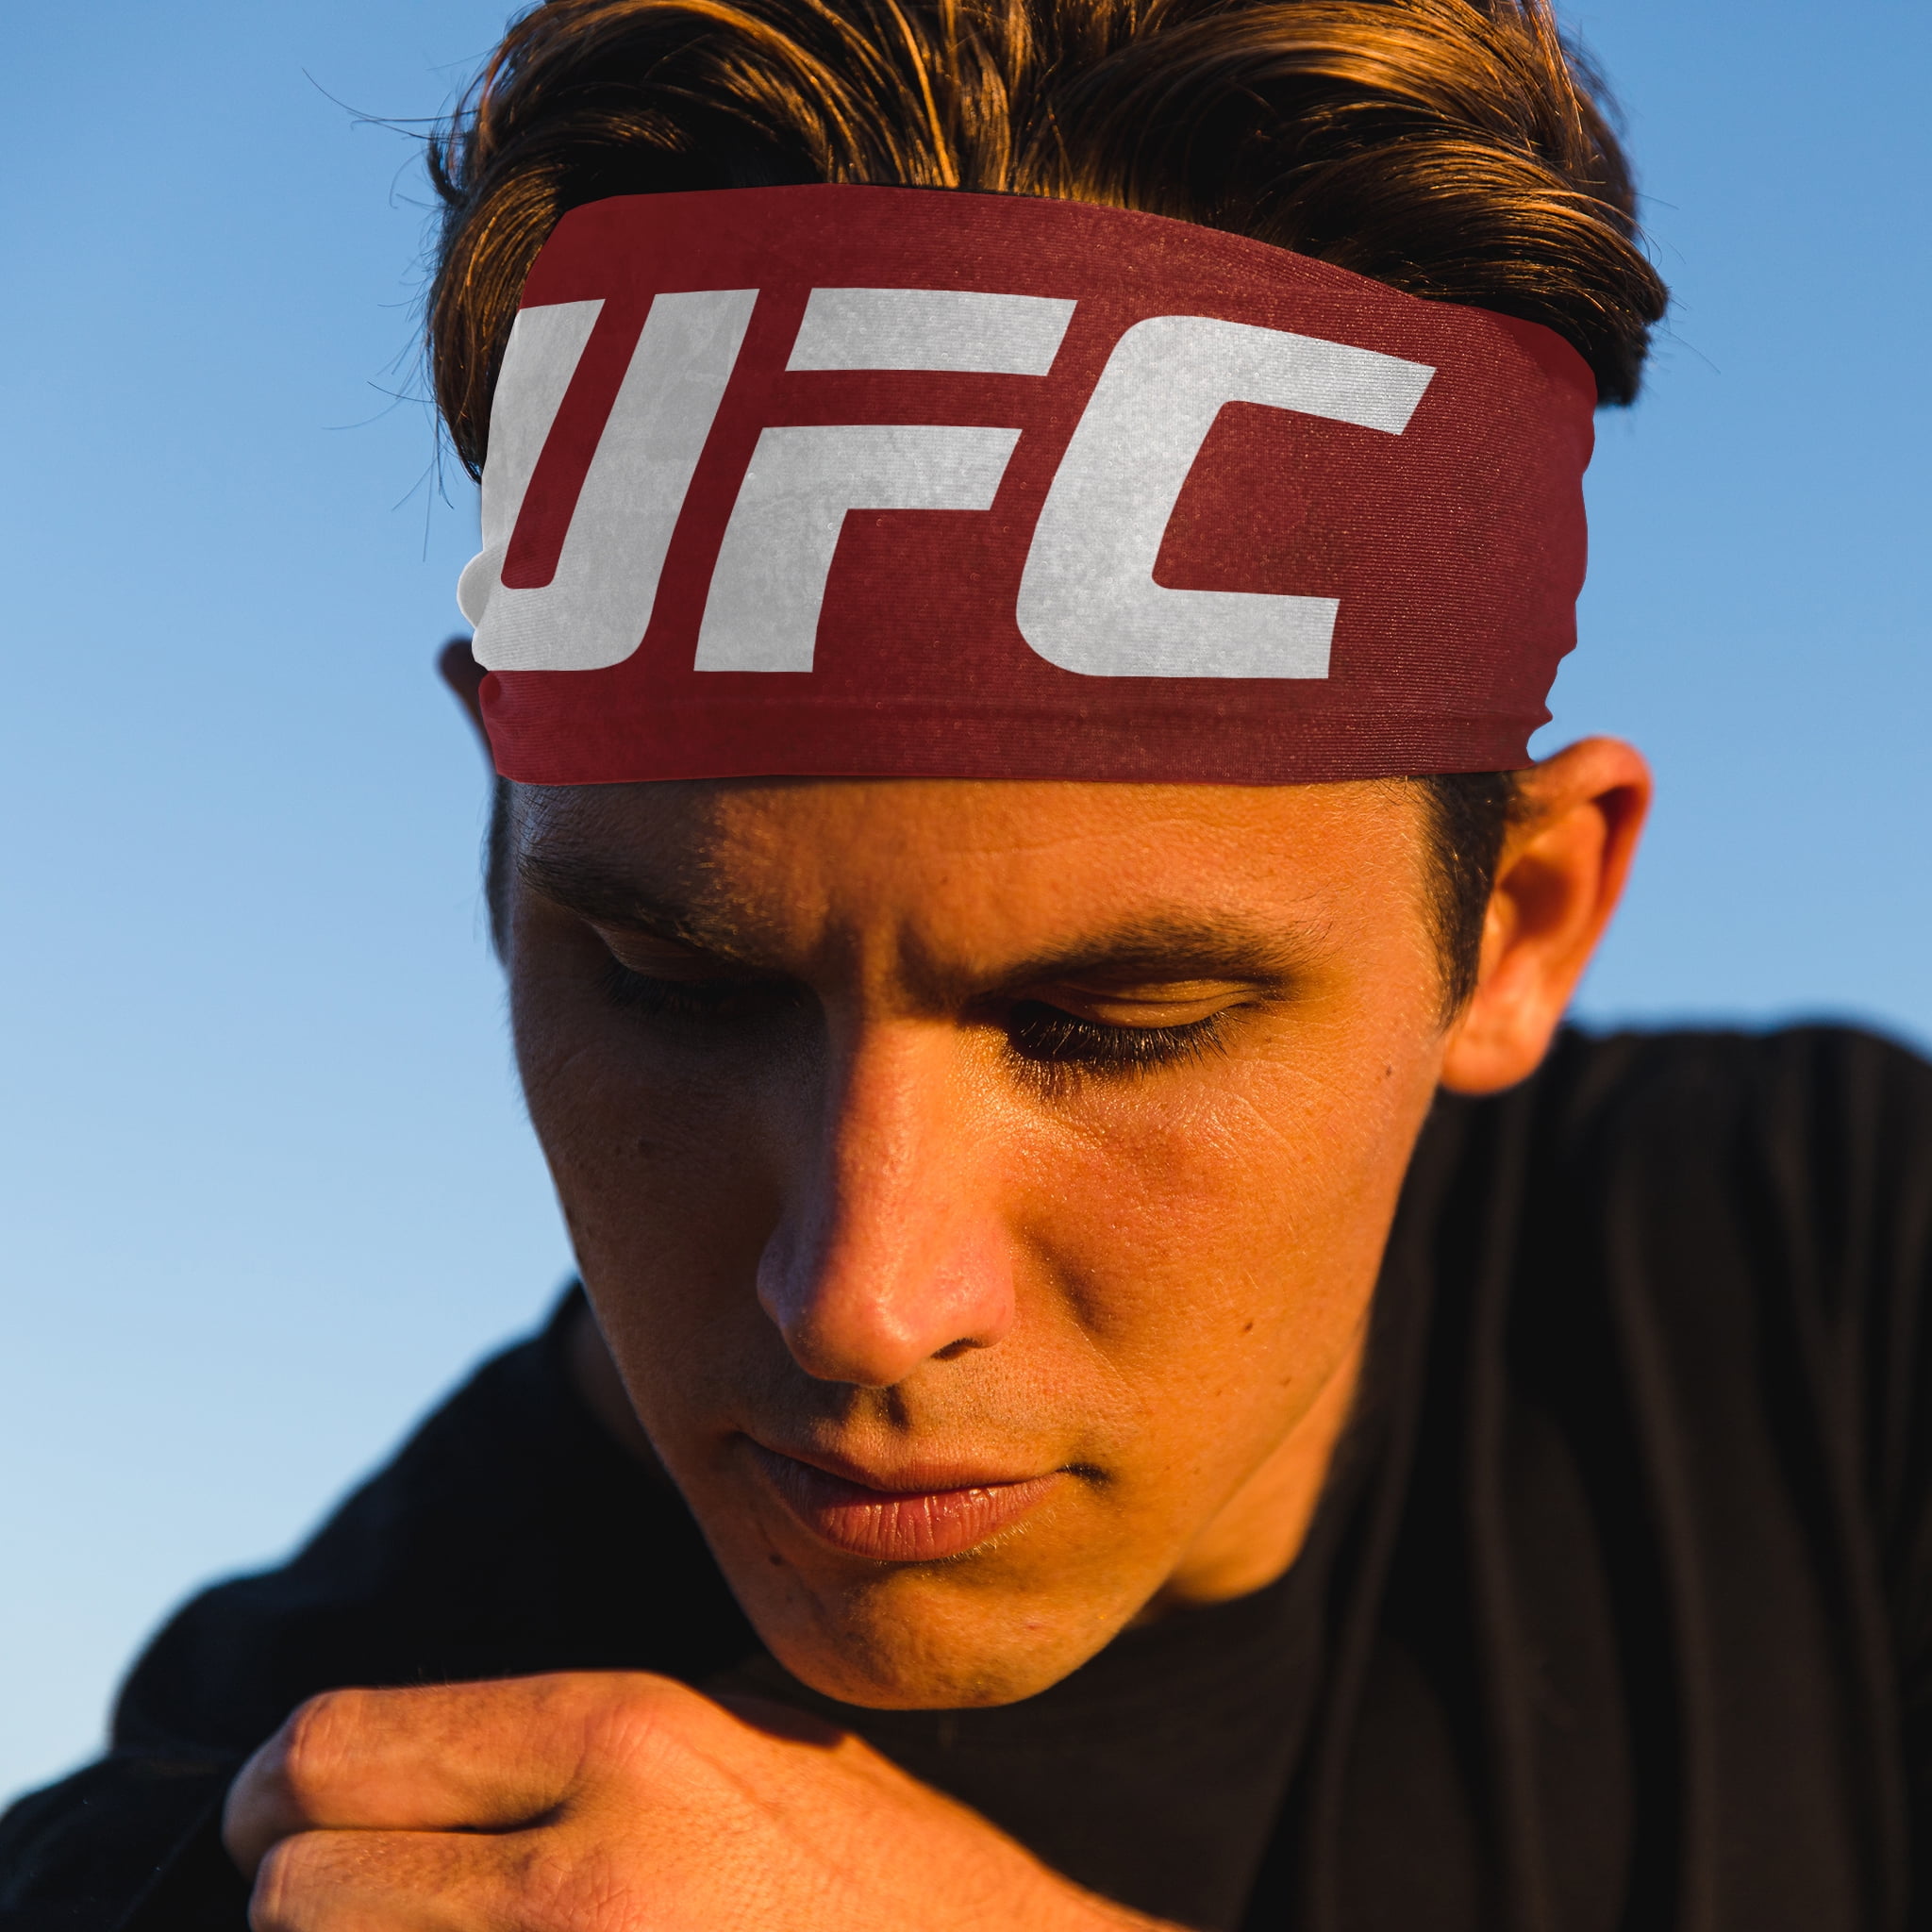 Hibaihin (取寄) UFC テクスチャー テーパード ヘッドバンド Suddora UFC Texture Tapered Headband  Red/White Seiki Hin-observatorikujteses.al